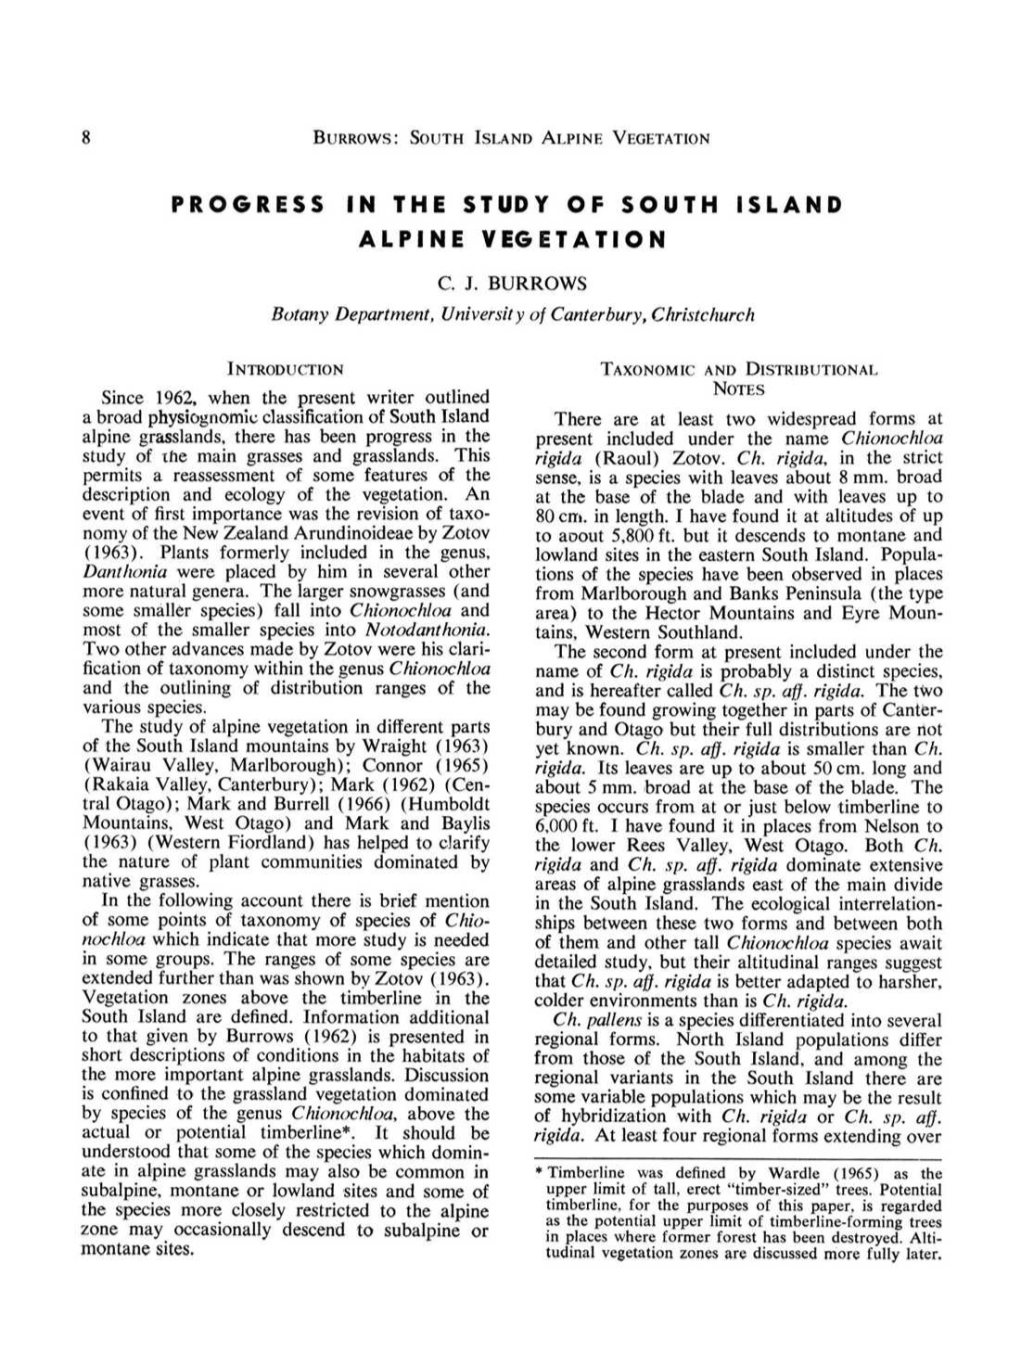 Progress in the Study of South Island Alp I N E V Eg Eta T Ion